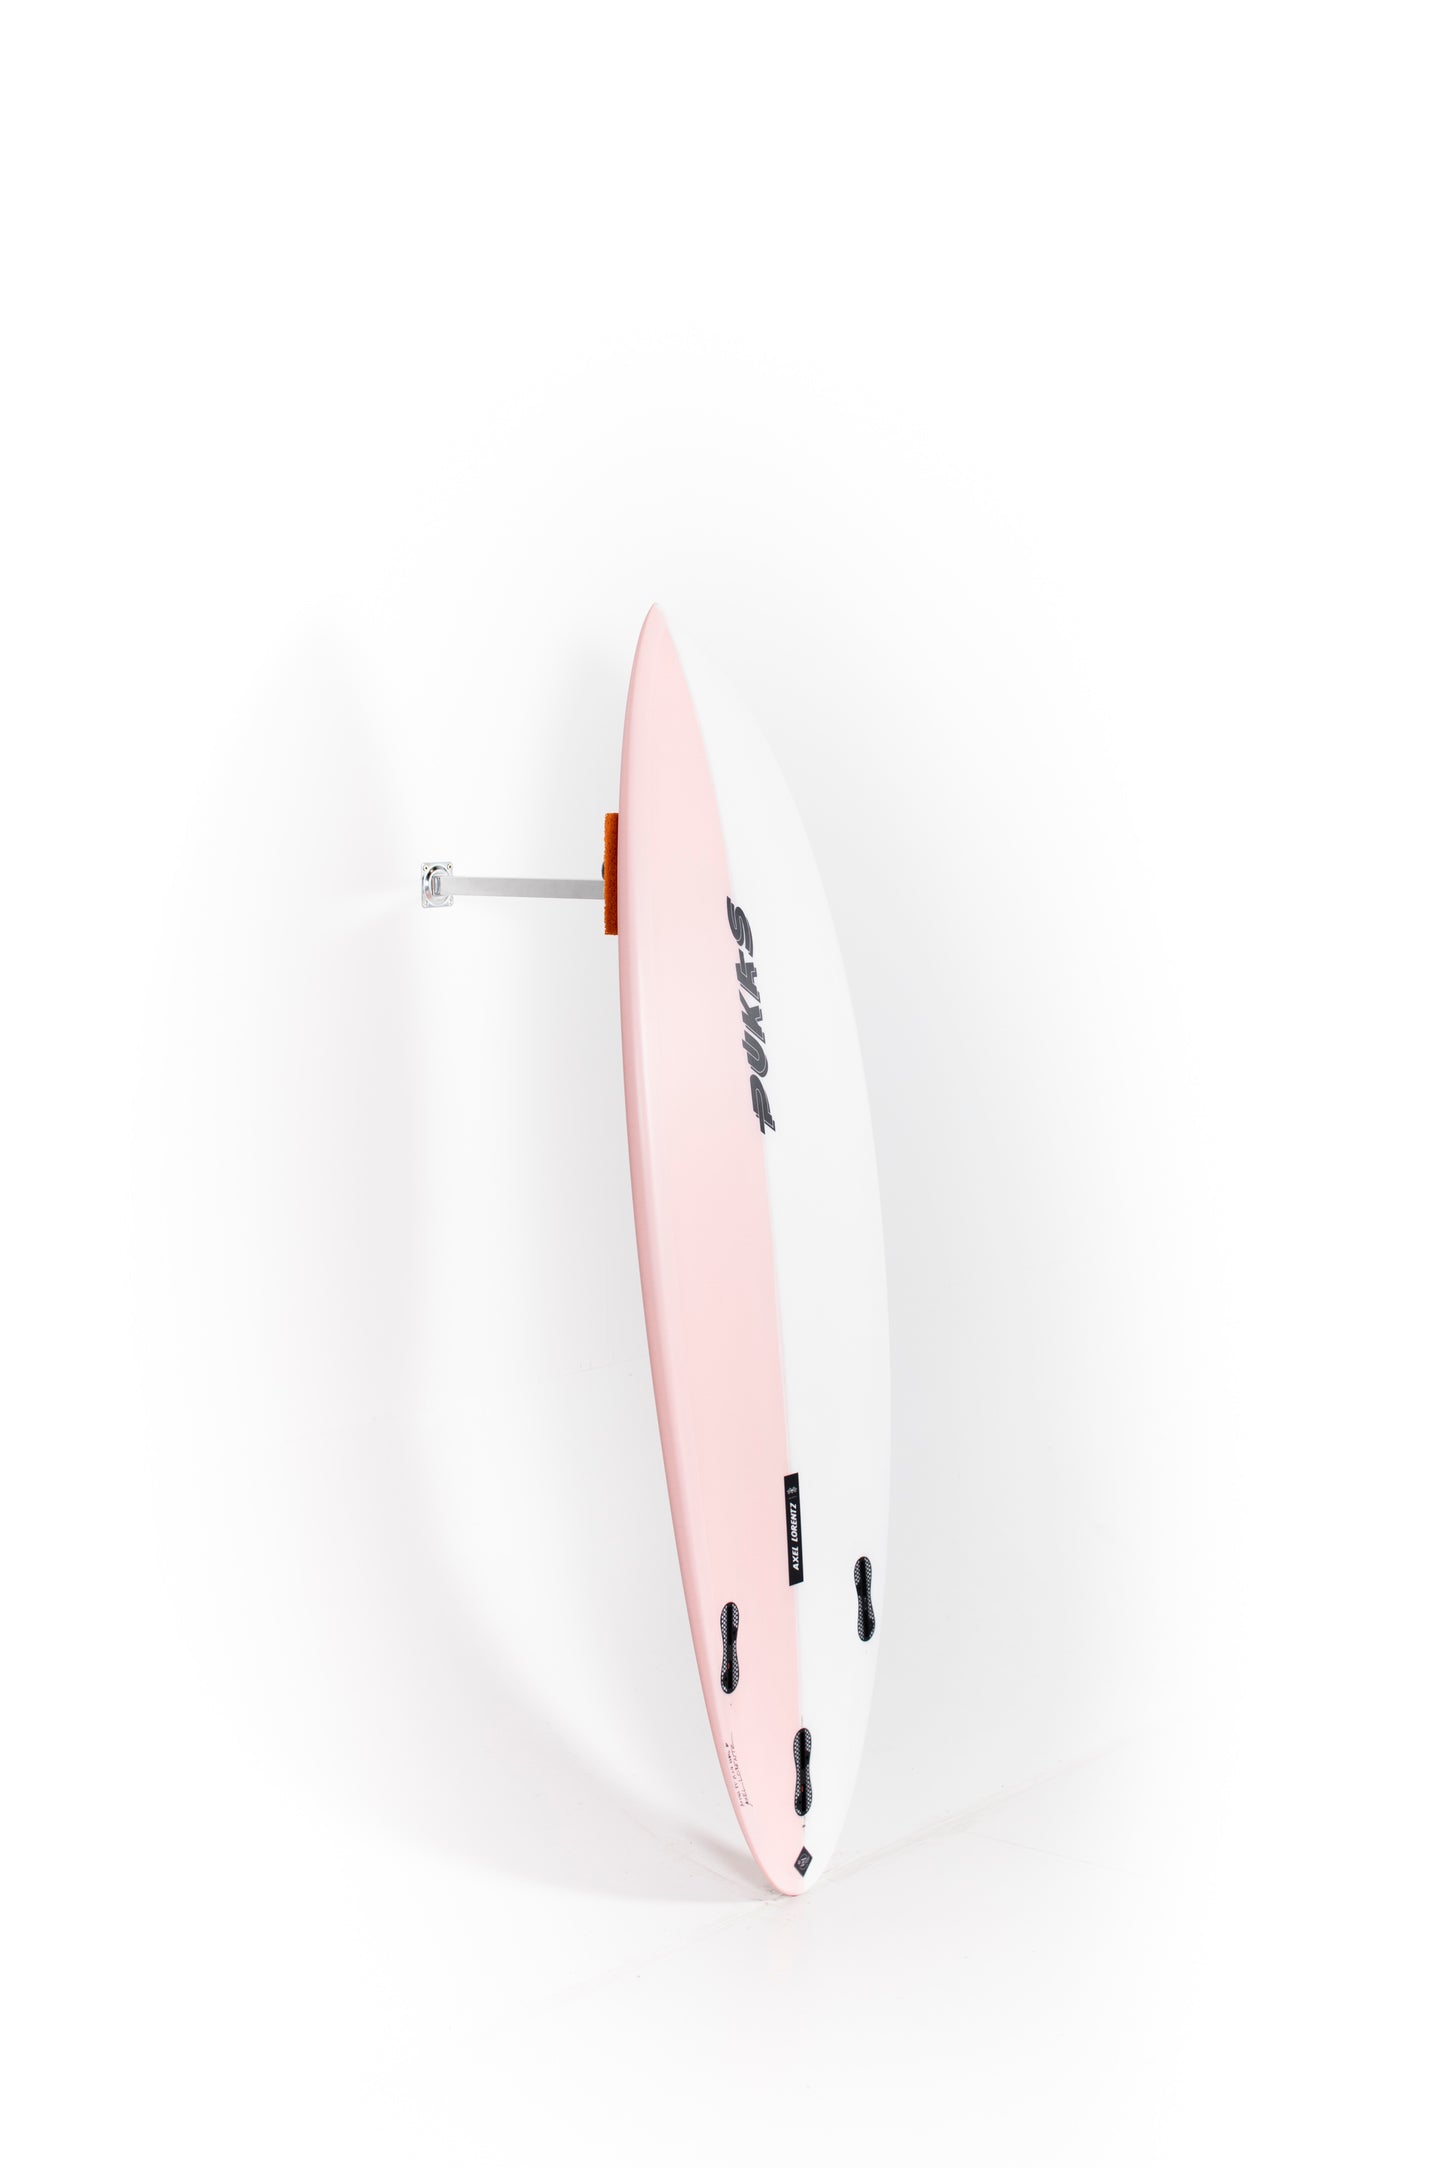 
                  
                    Pukas Surf shop - Pukas Surfboard - ORIGINAL 69 by Axel Lorentz - 5’4” x 19 x 2,13 - 23,89L - AX05464
                  
                